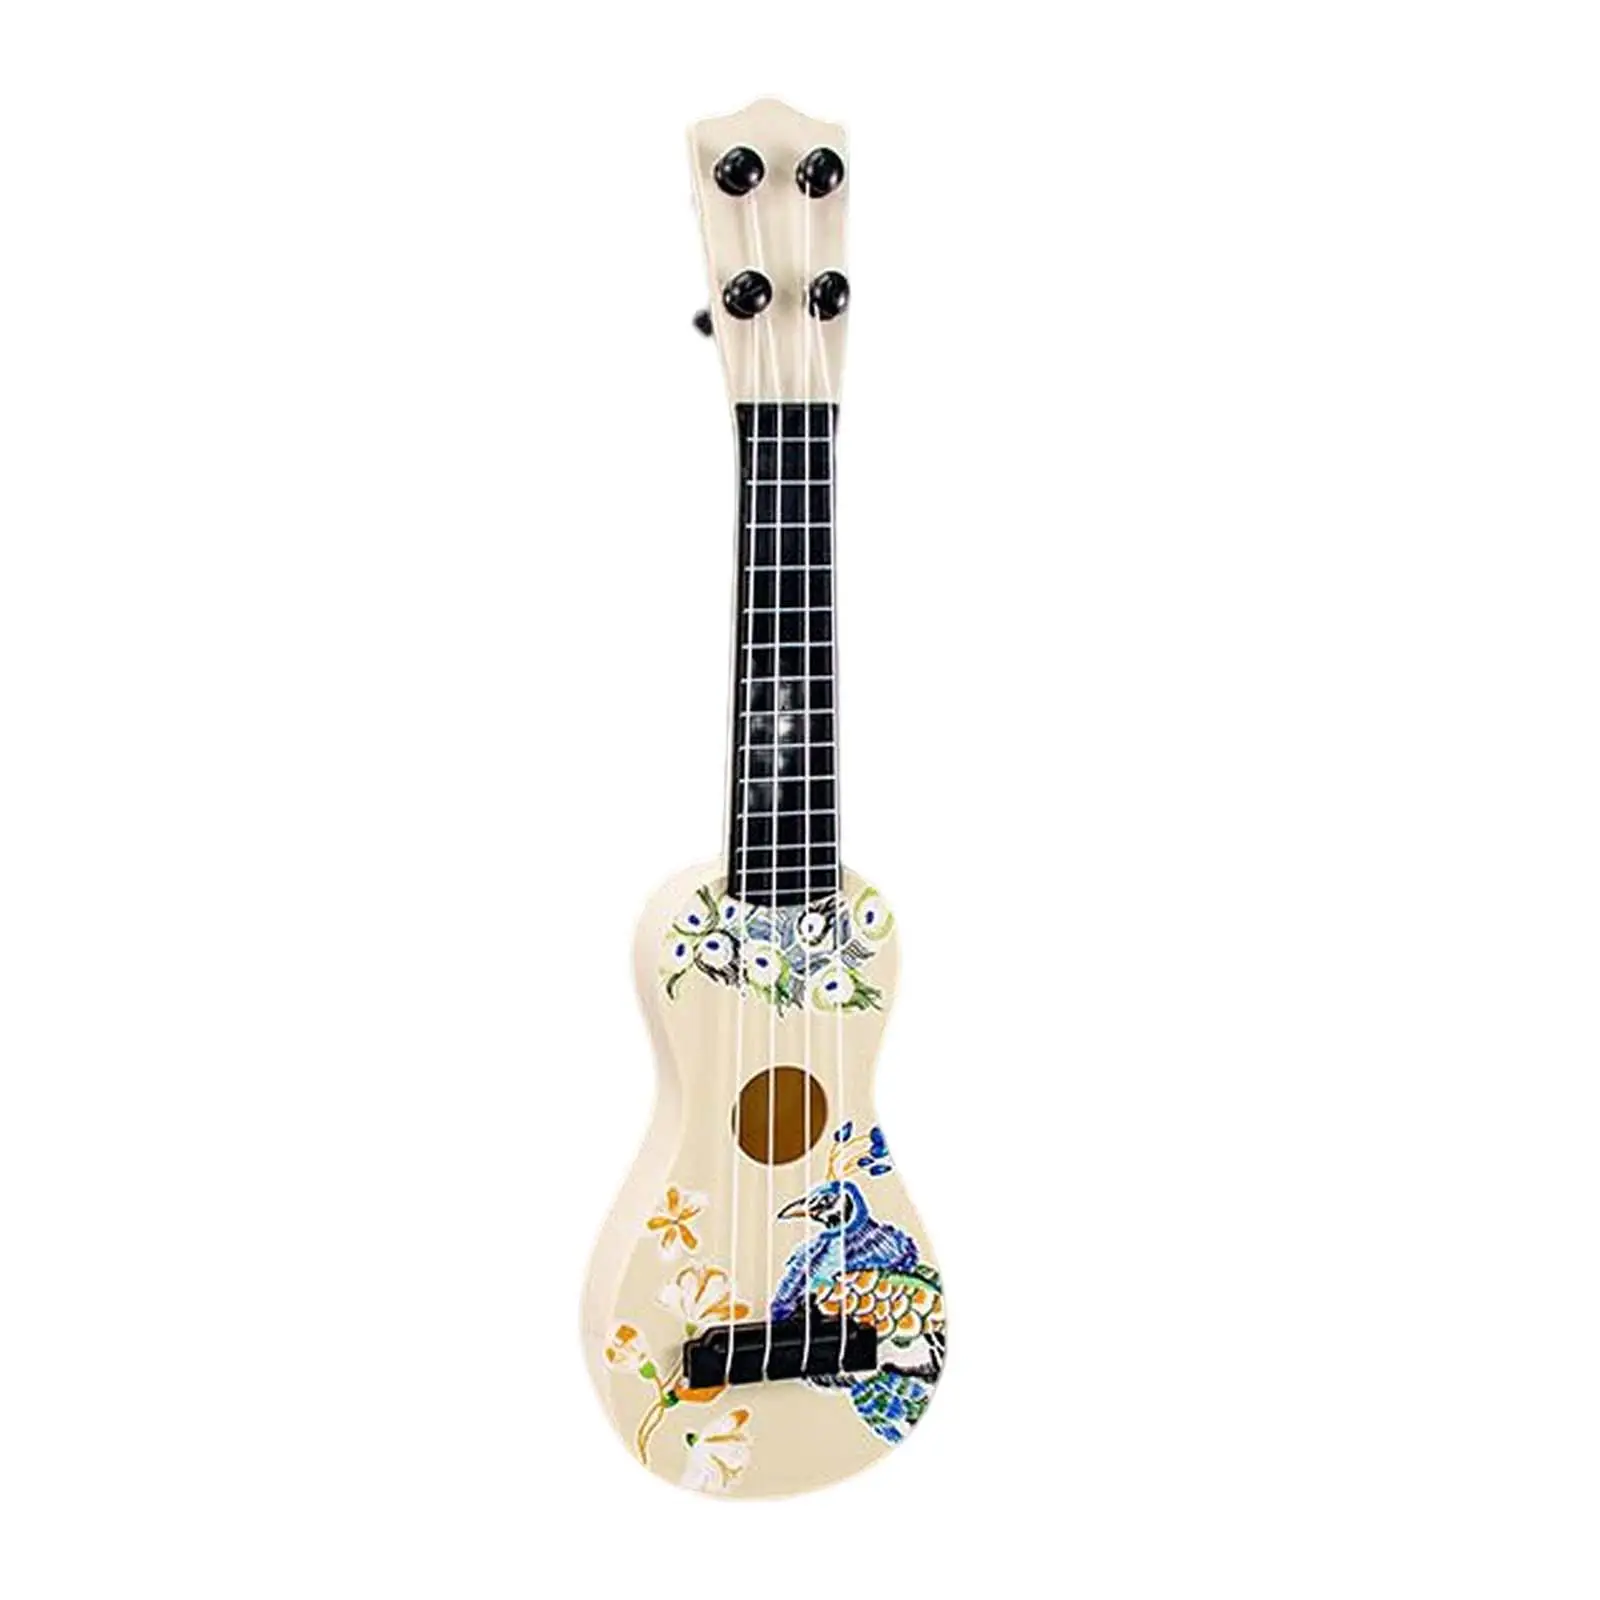 Kids Ukulele Guitar Keep Tones with 4 Strings Ukulele Guitar Musical Instrument for Beginners Children Party Favor